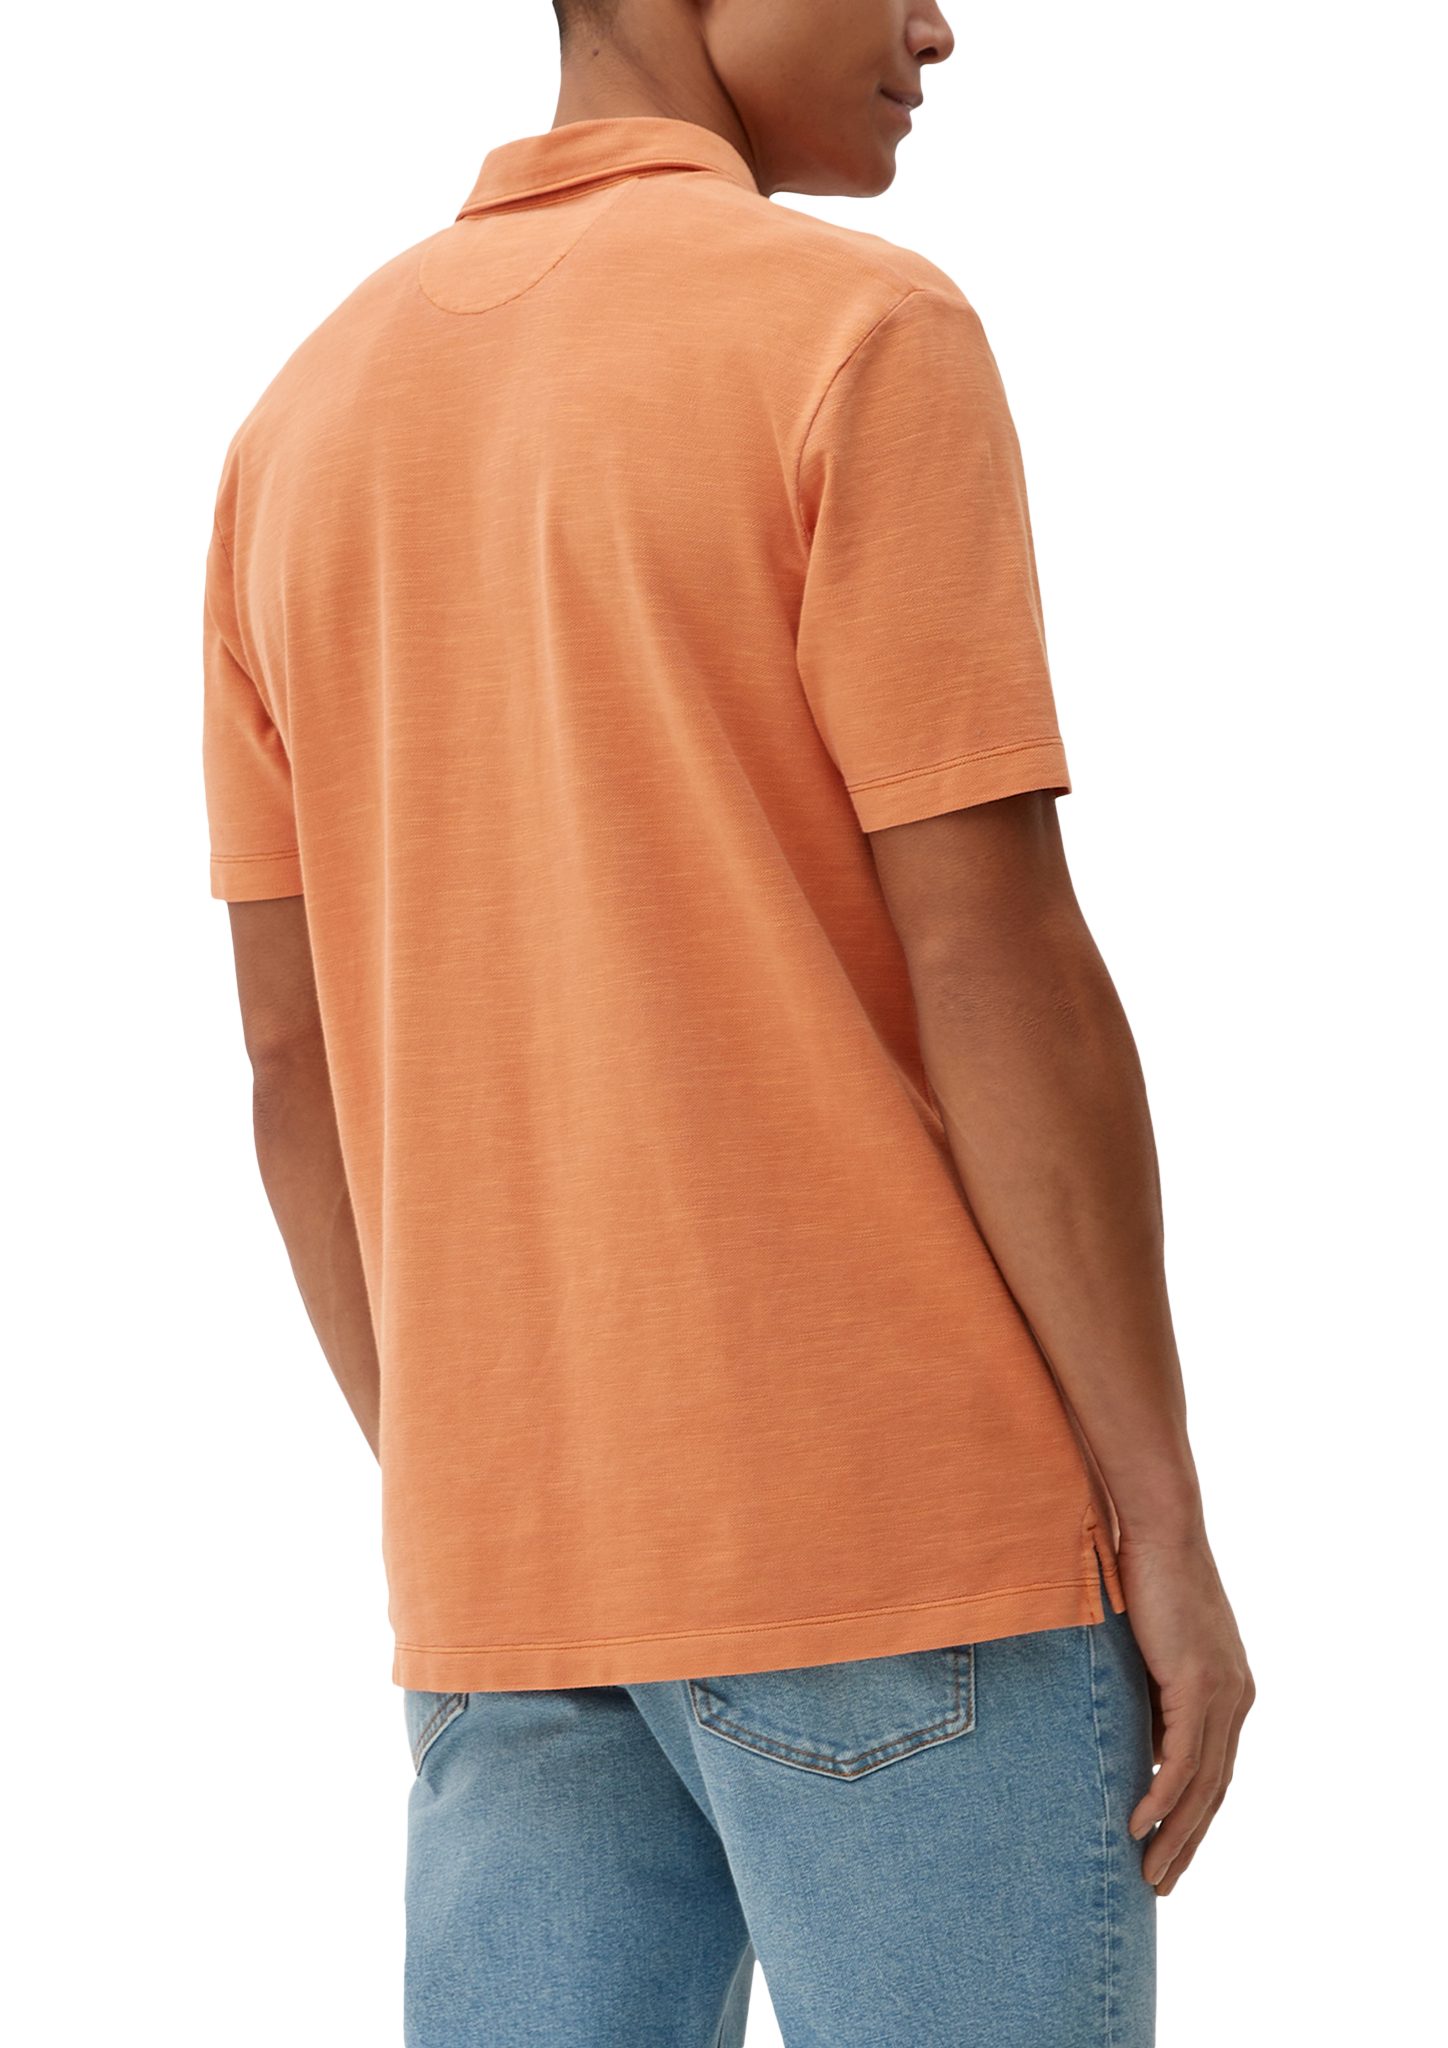 orange Label-Patch mit Label-Patch Poloshirt s.Oliver Kurzarmshirt